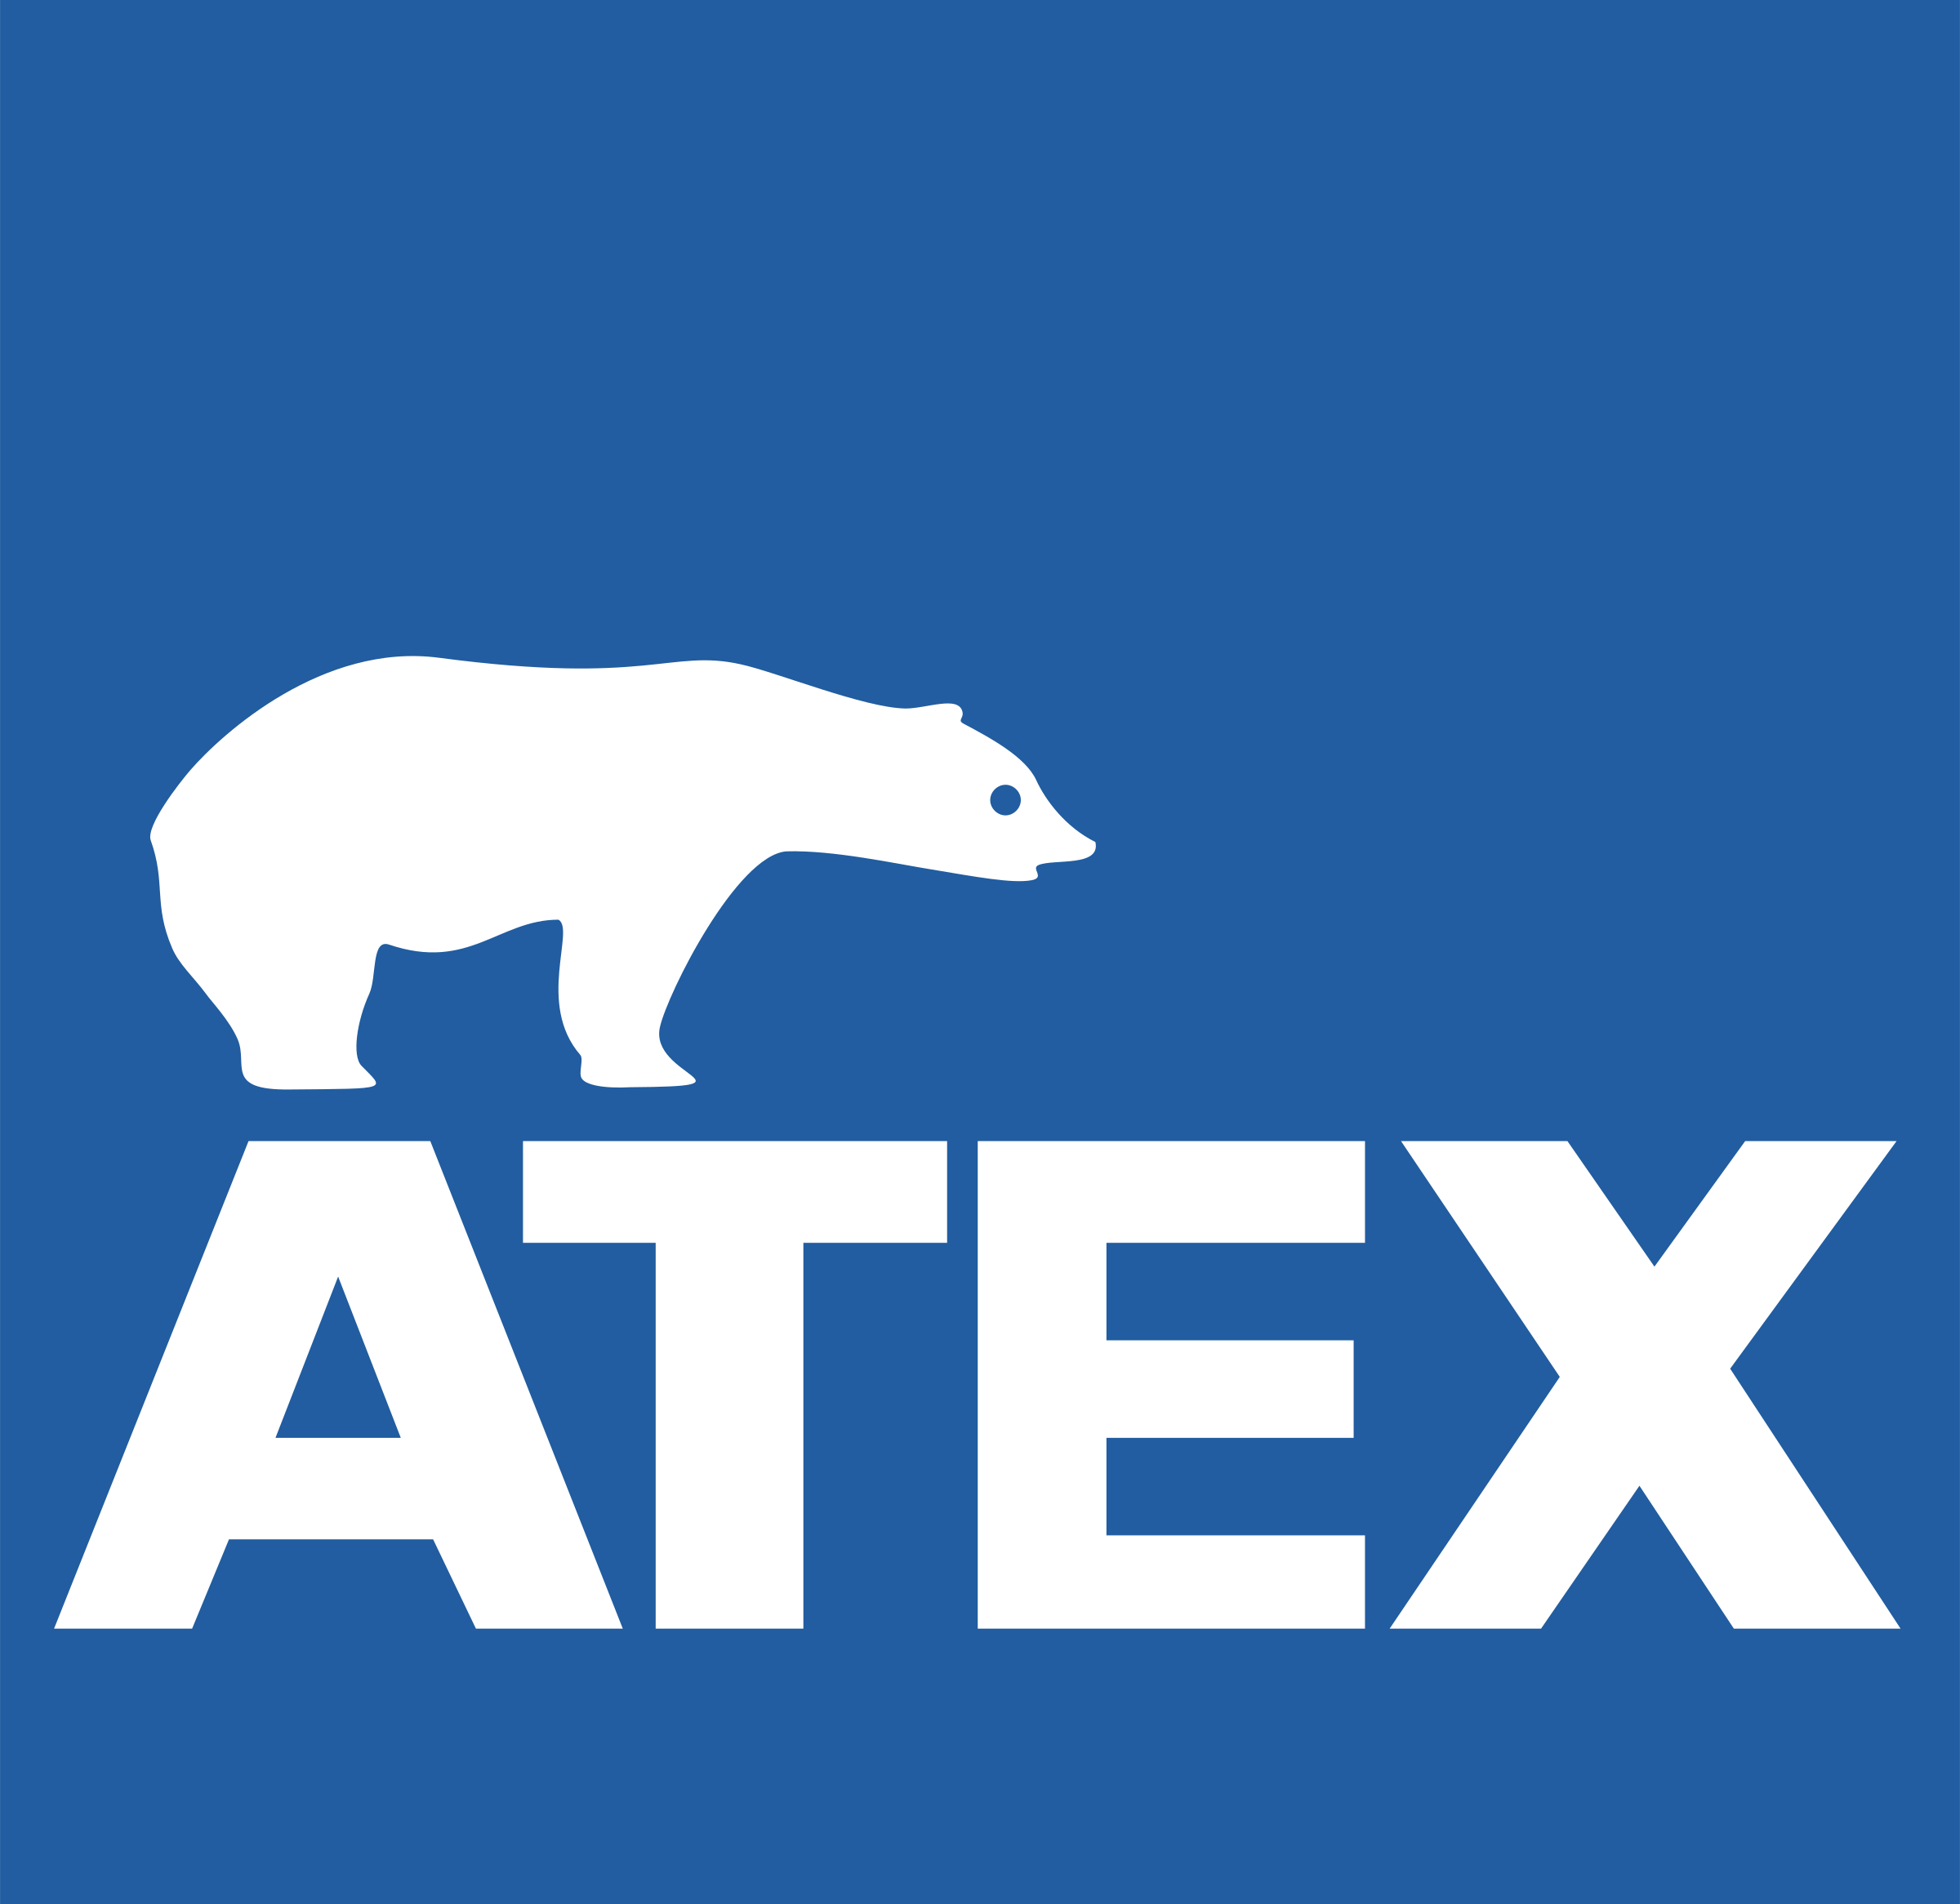 ATEX Logo - Atex Logo PNG Transparent & SVG Vector - Freebie Supply